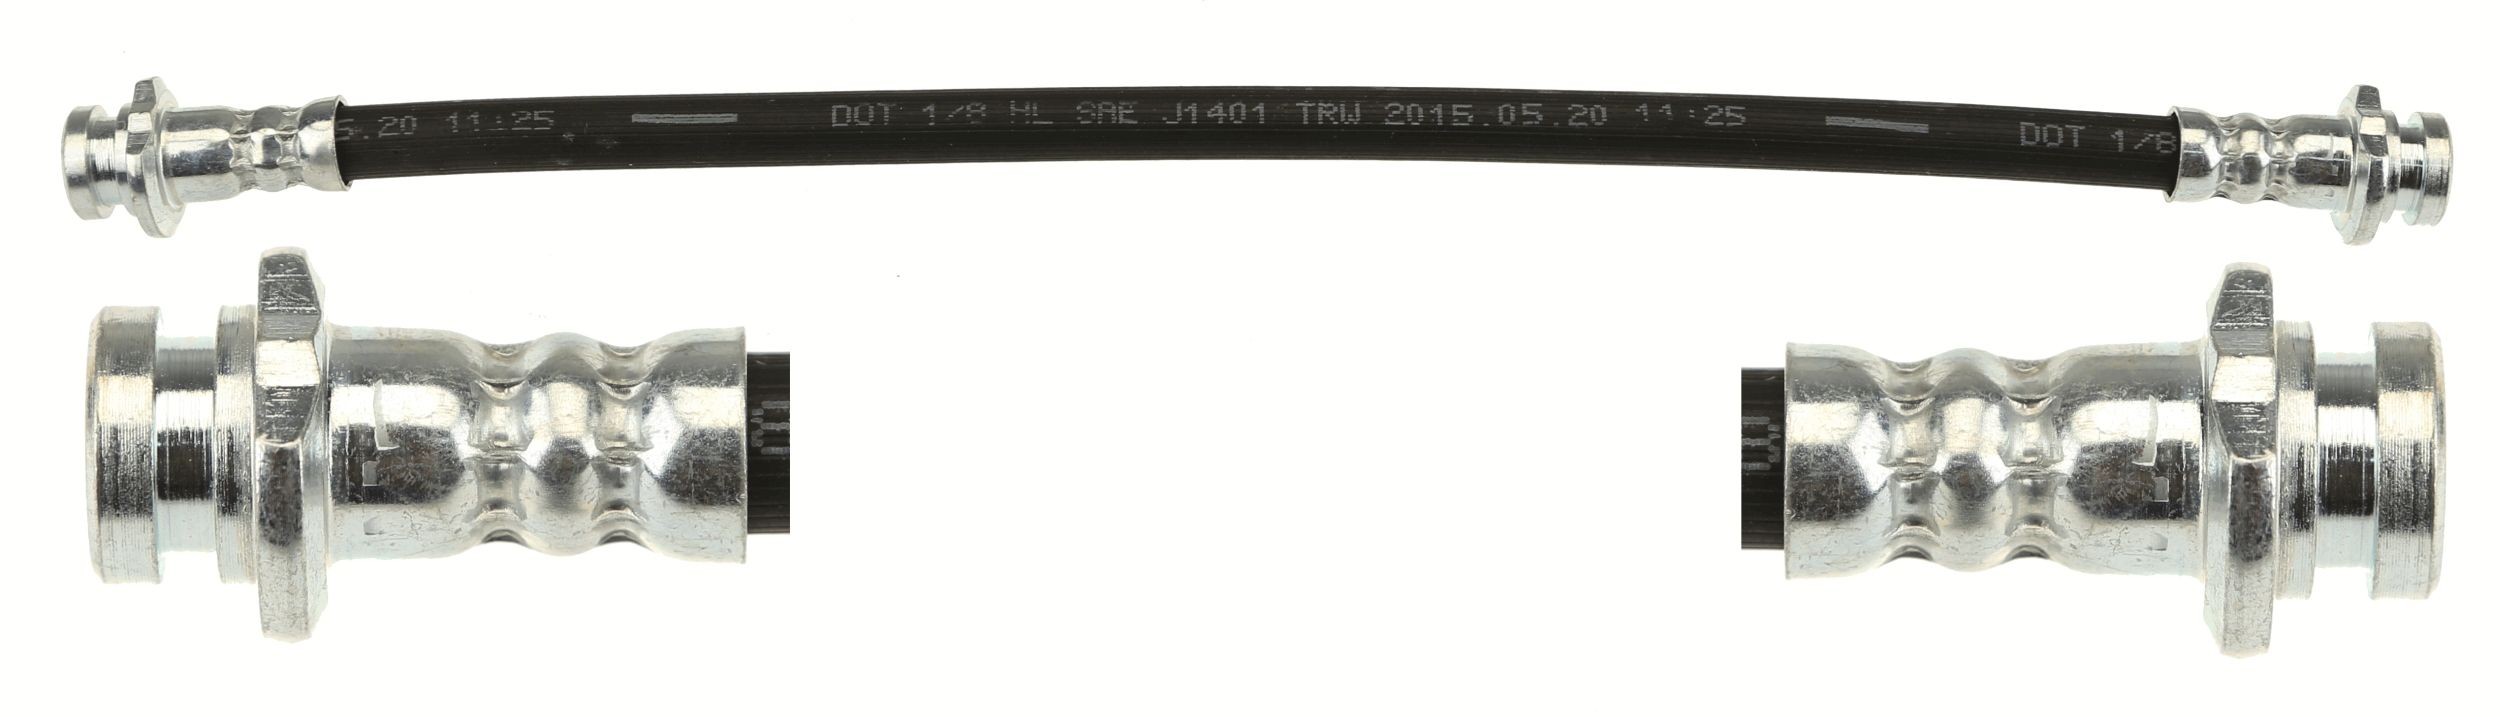 TRW 330 mm, M10x1, Internal Thread Length: 330mm, Thread Size 1: M10x1, Thread Size 2: M10x1 Brake line PHA612 buy